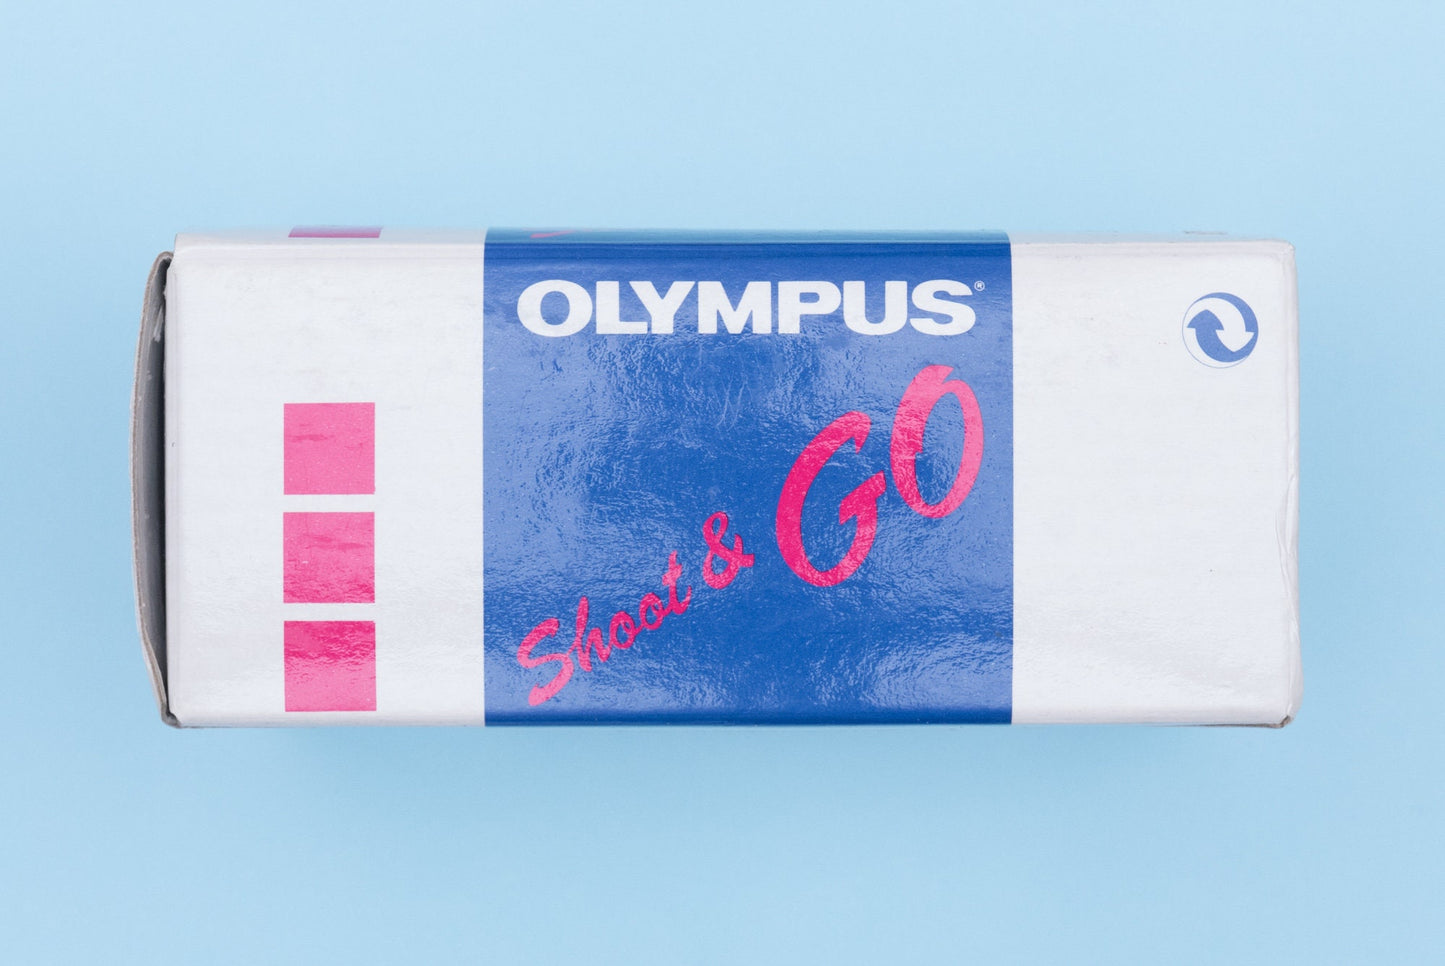 Olympus Shoot & Go 35mm Compact Film Camera